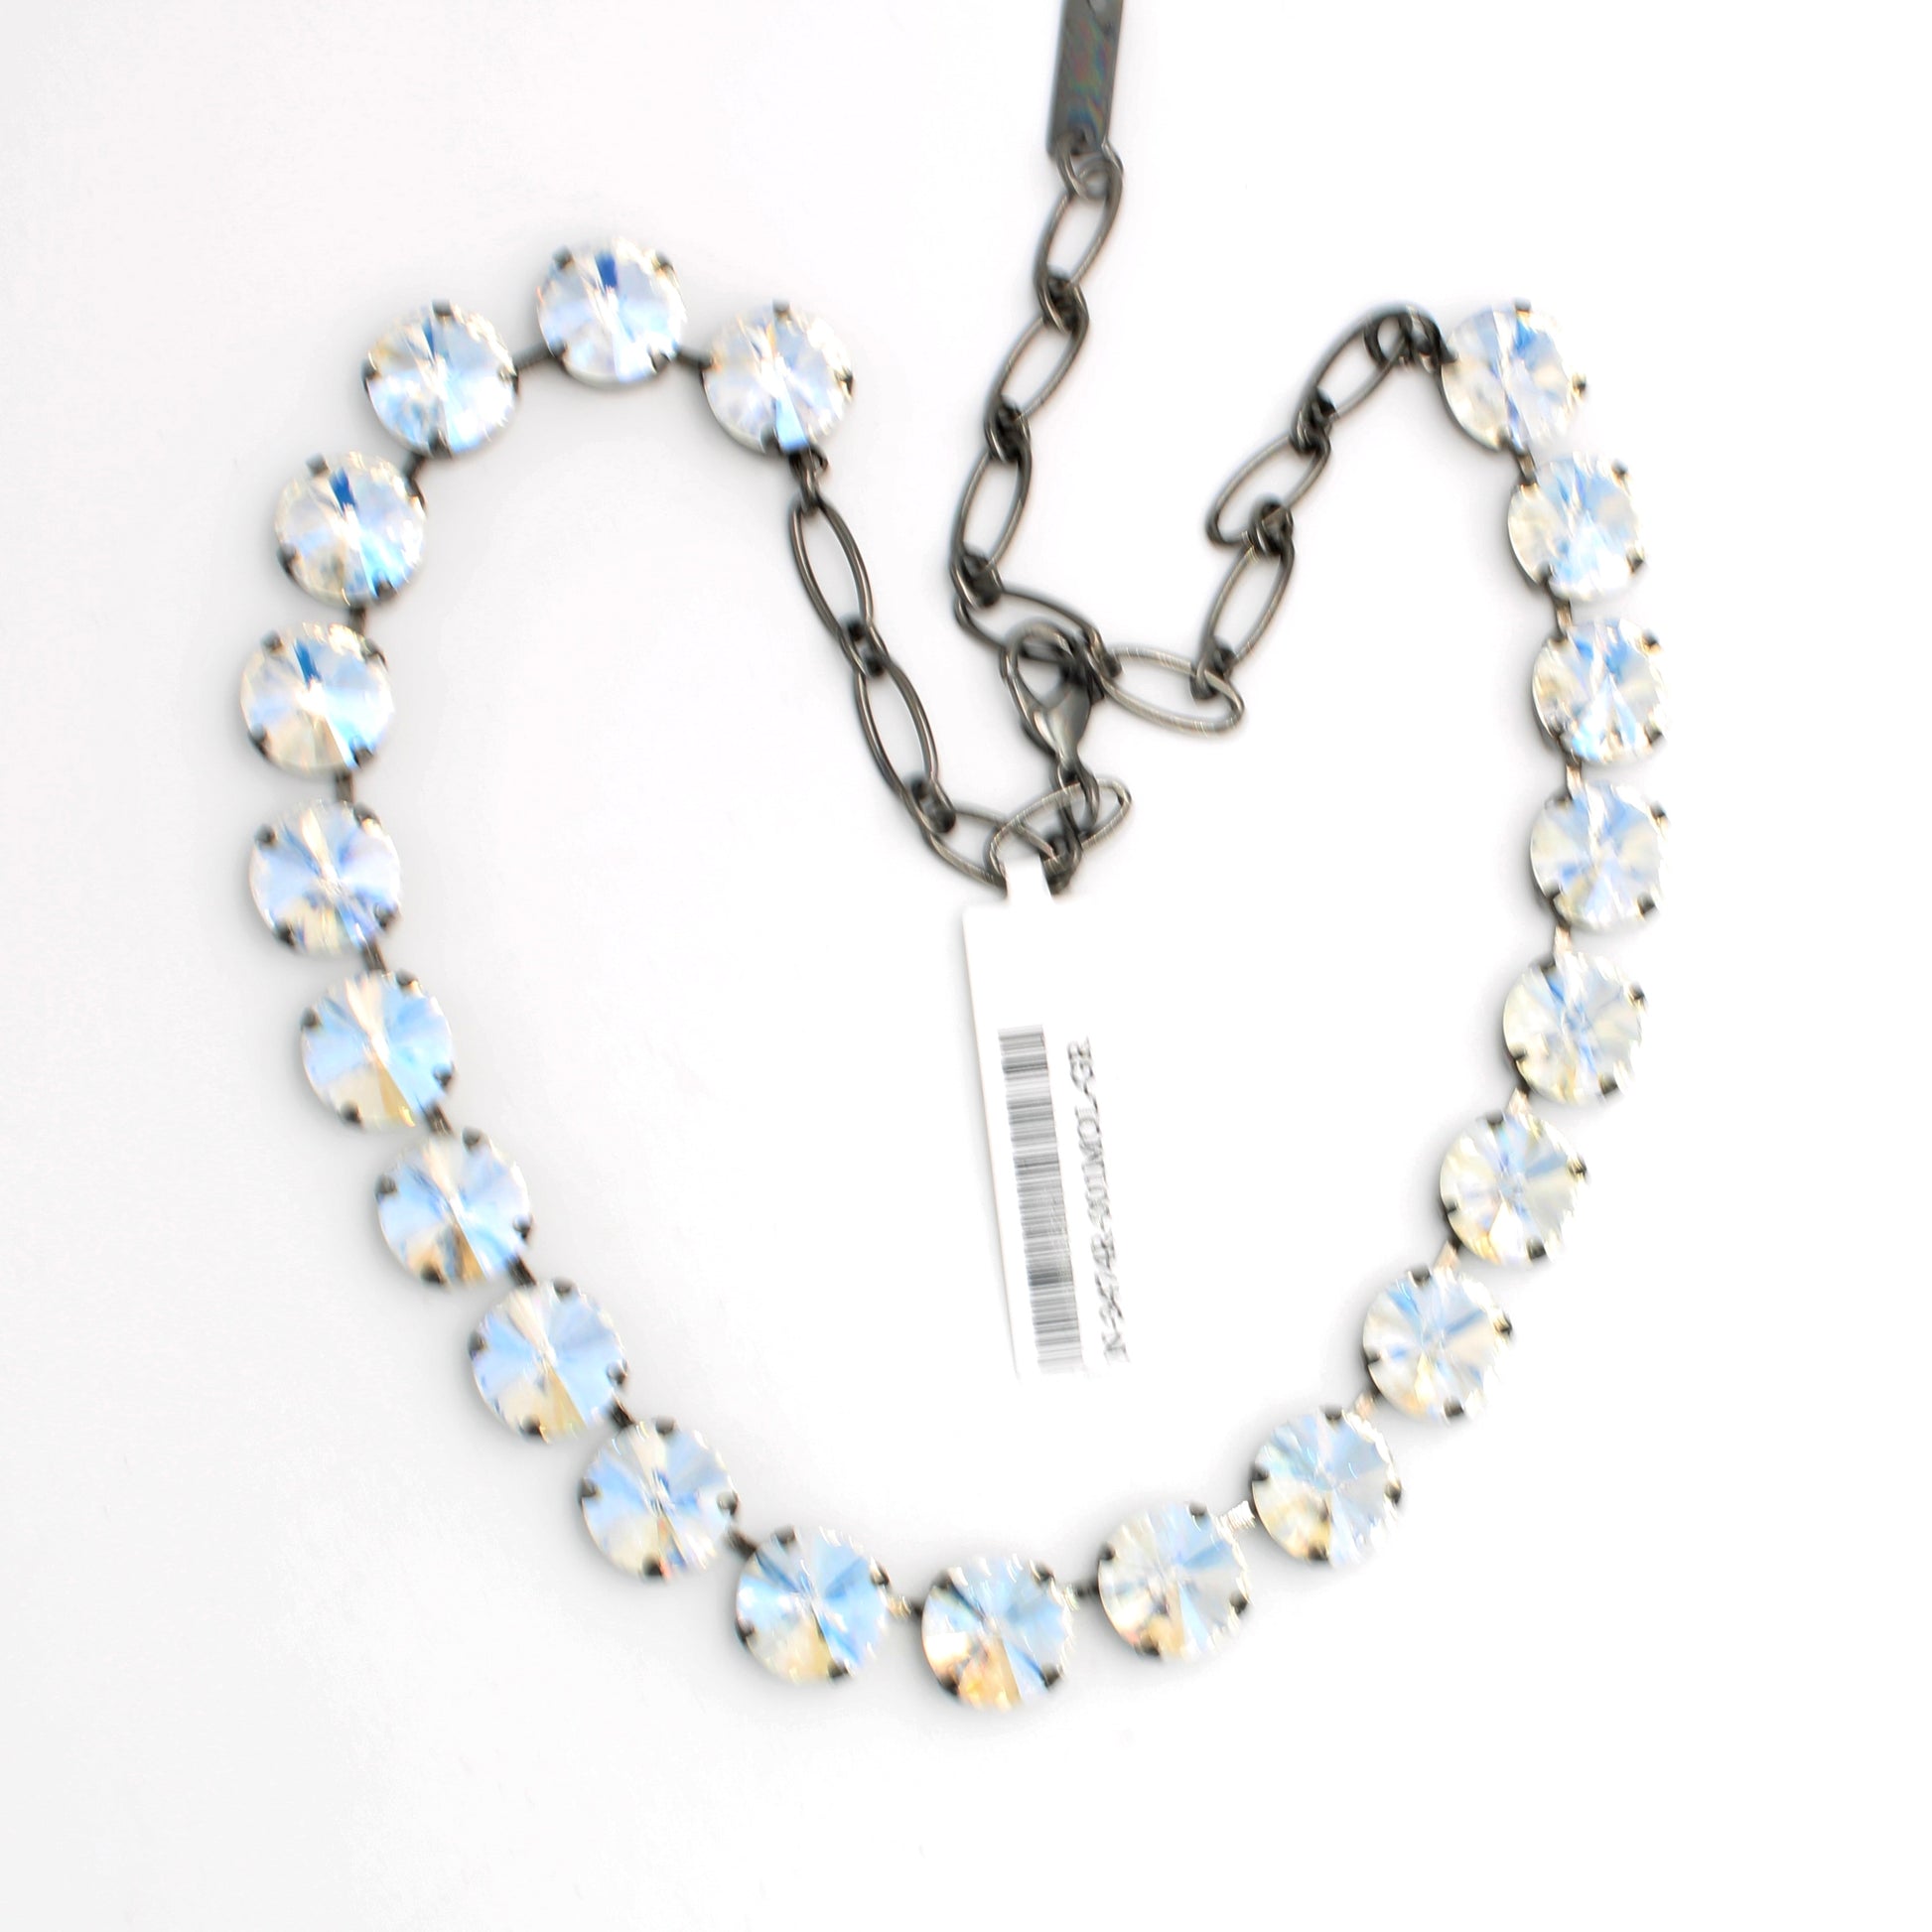 Crystal Moonlight Rivoli Cut Crystal Necklace in Gray - MaryTyke's